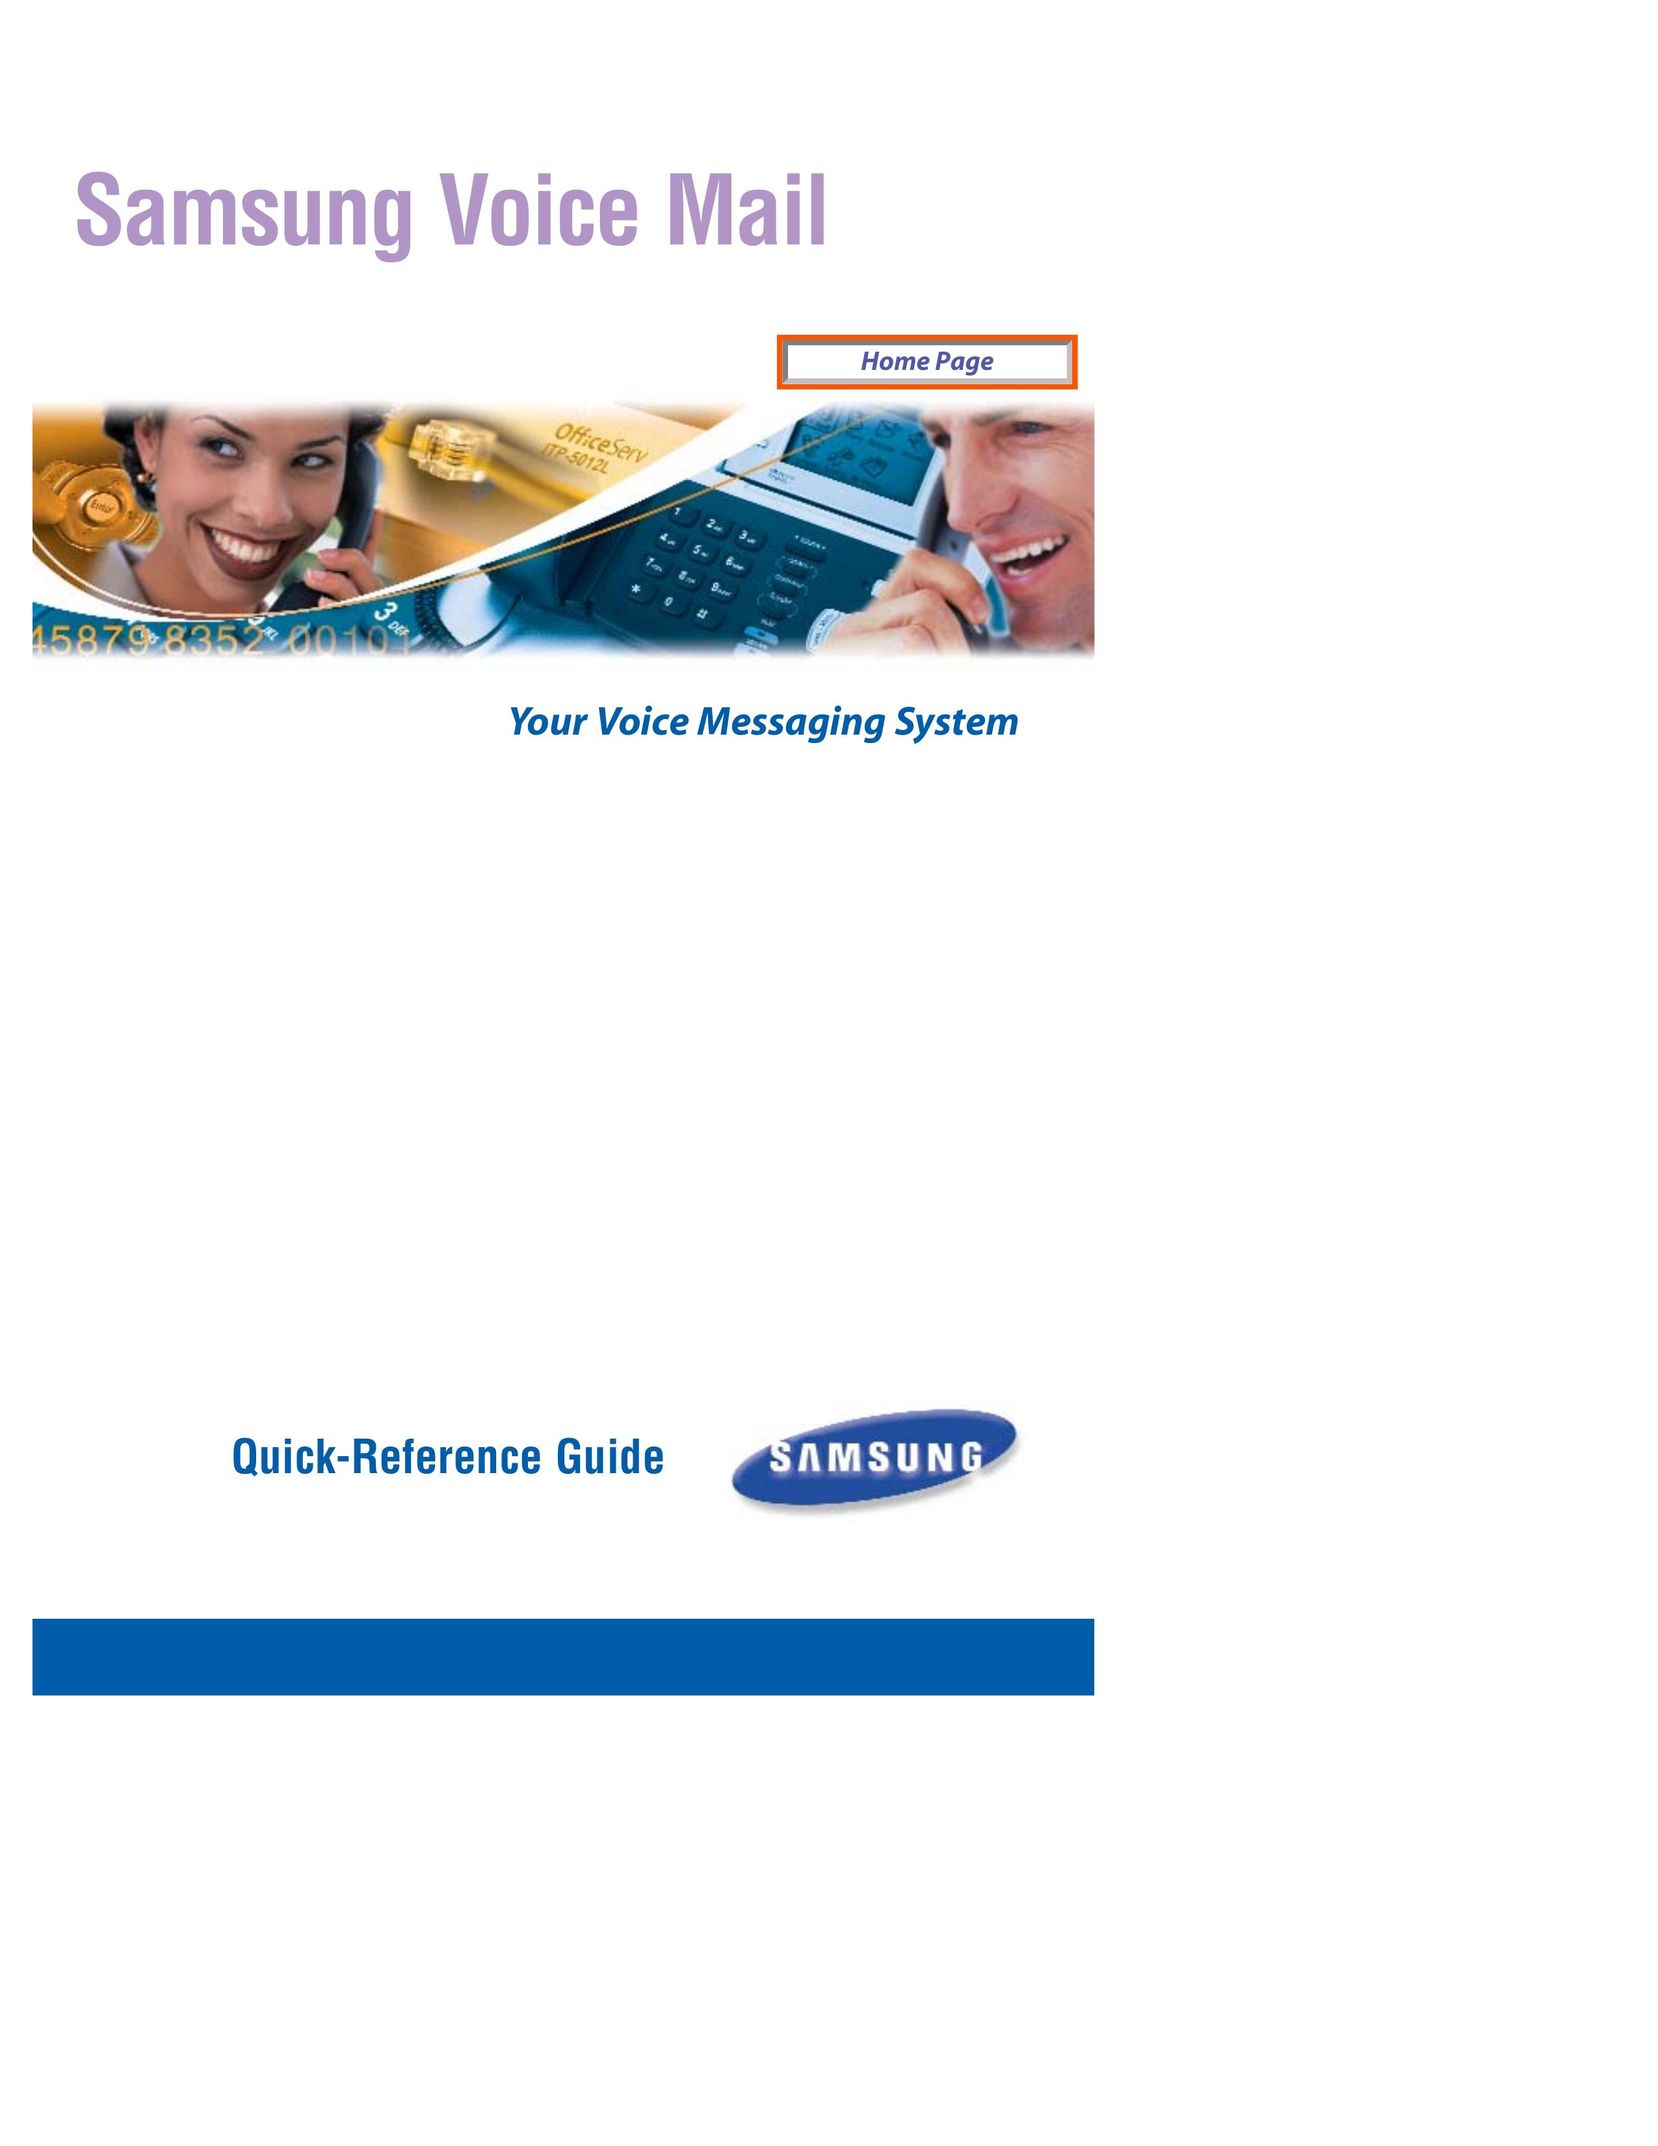 Samsung SVM-400E Answering Machine User Manual